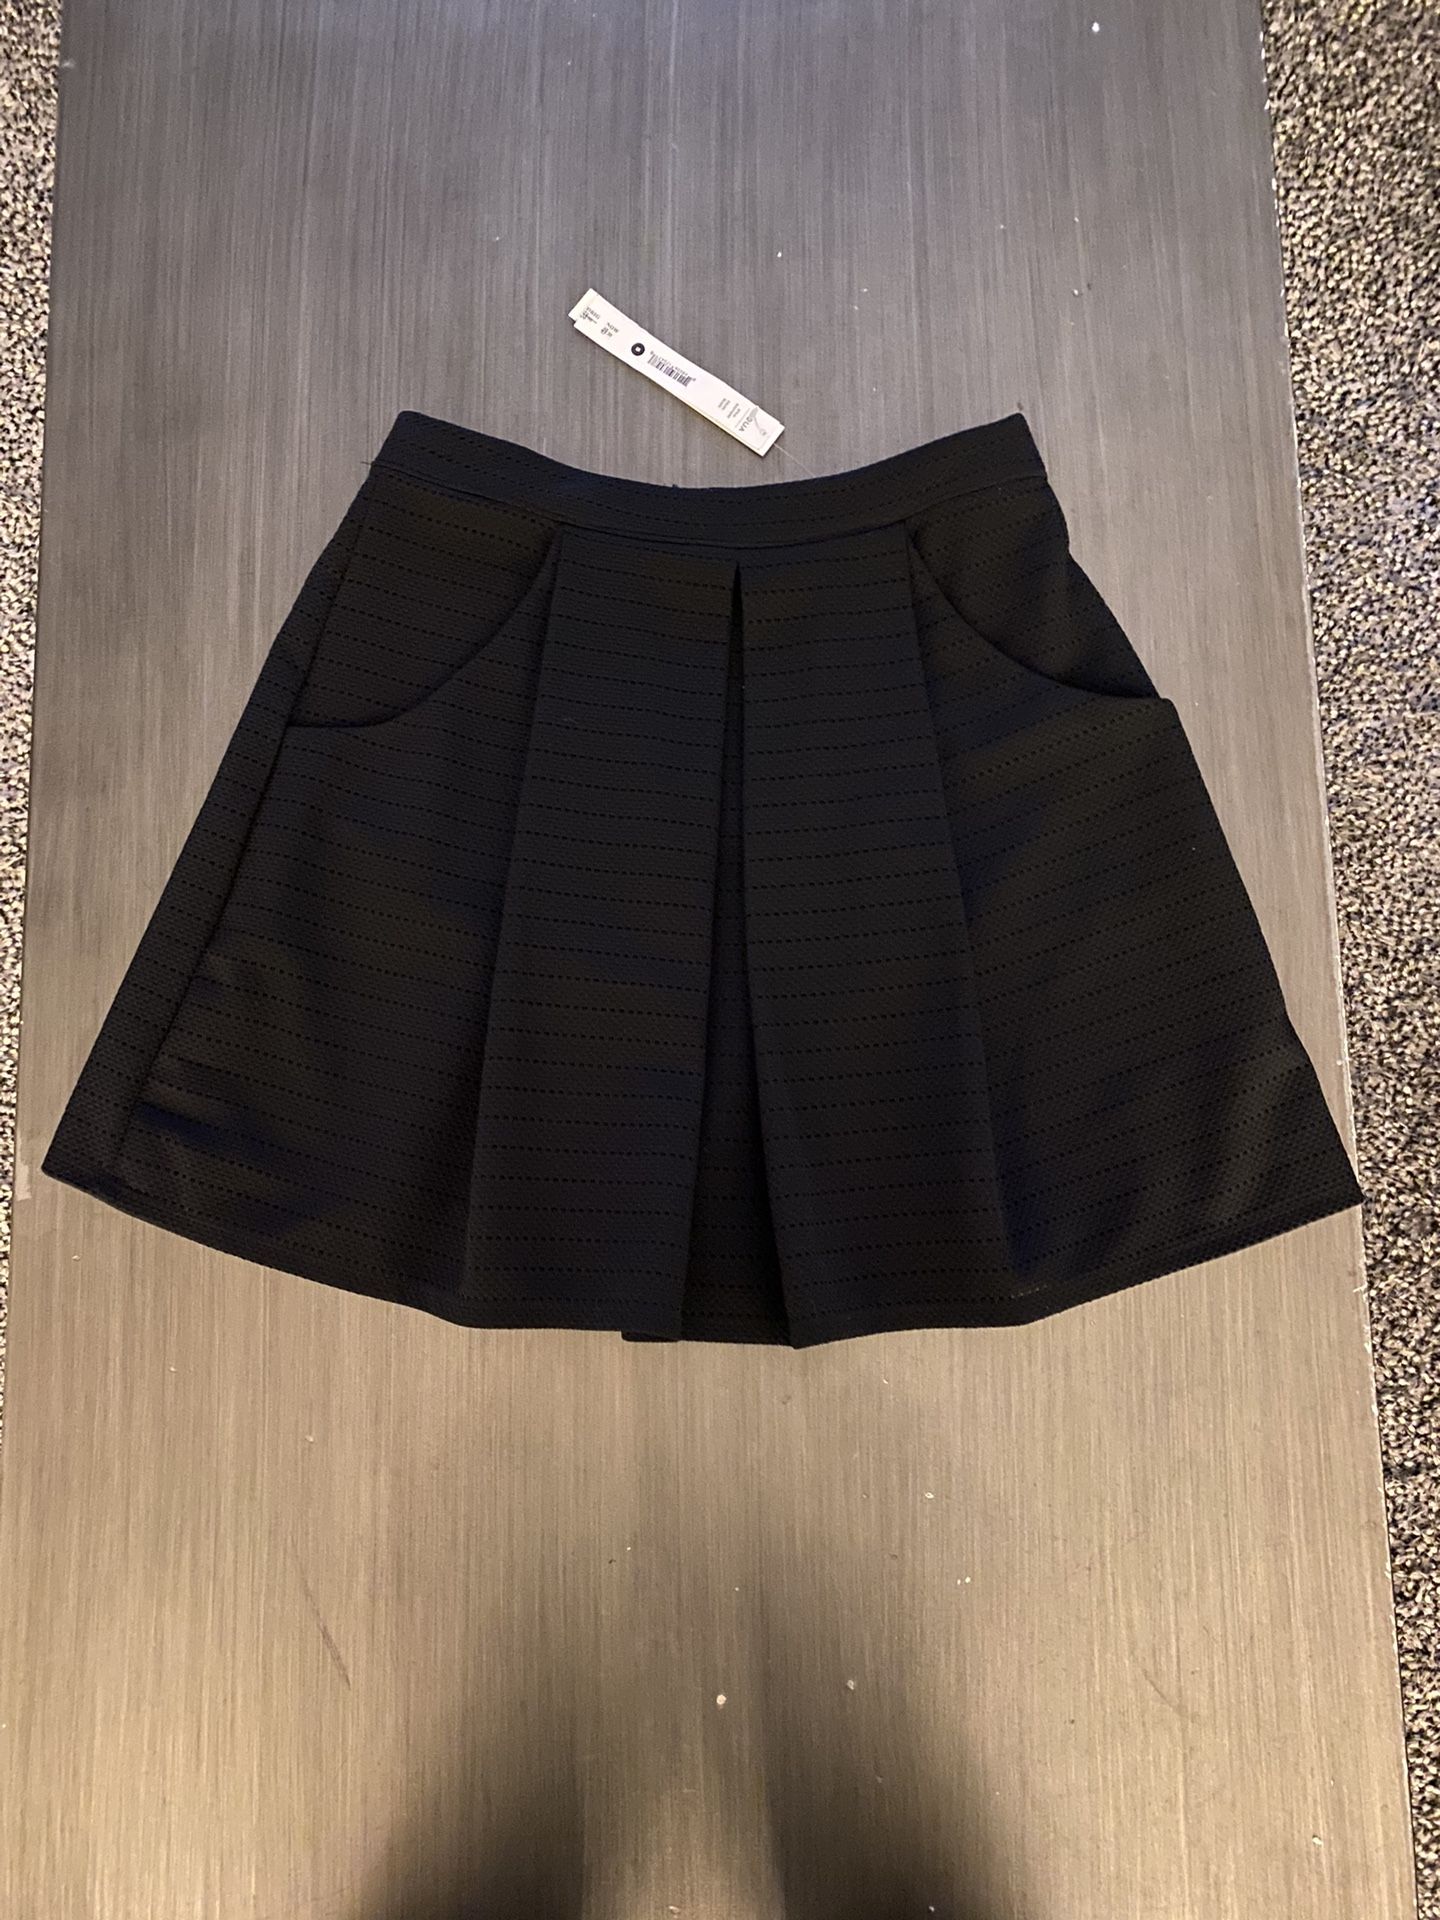 Black Skirt, Brand: Aqua. Brand New Purchased From Bloomingdale’s 